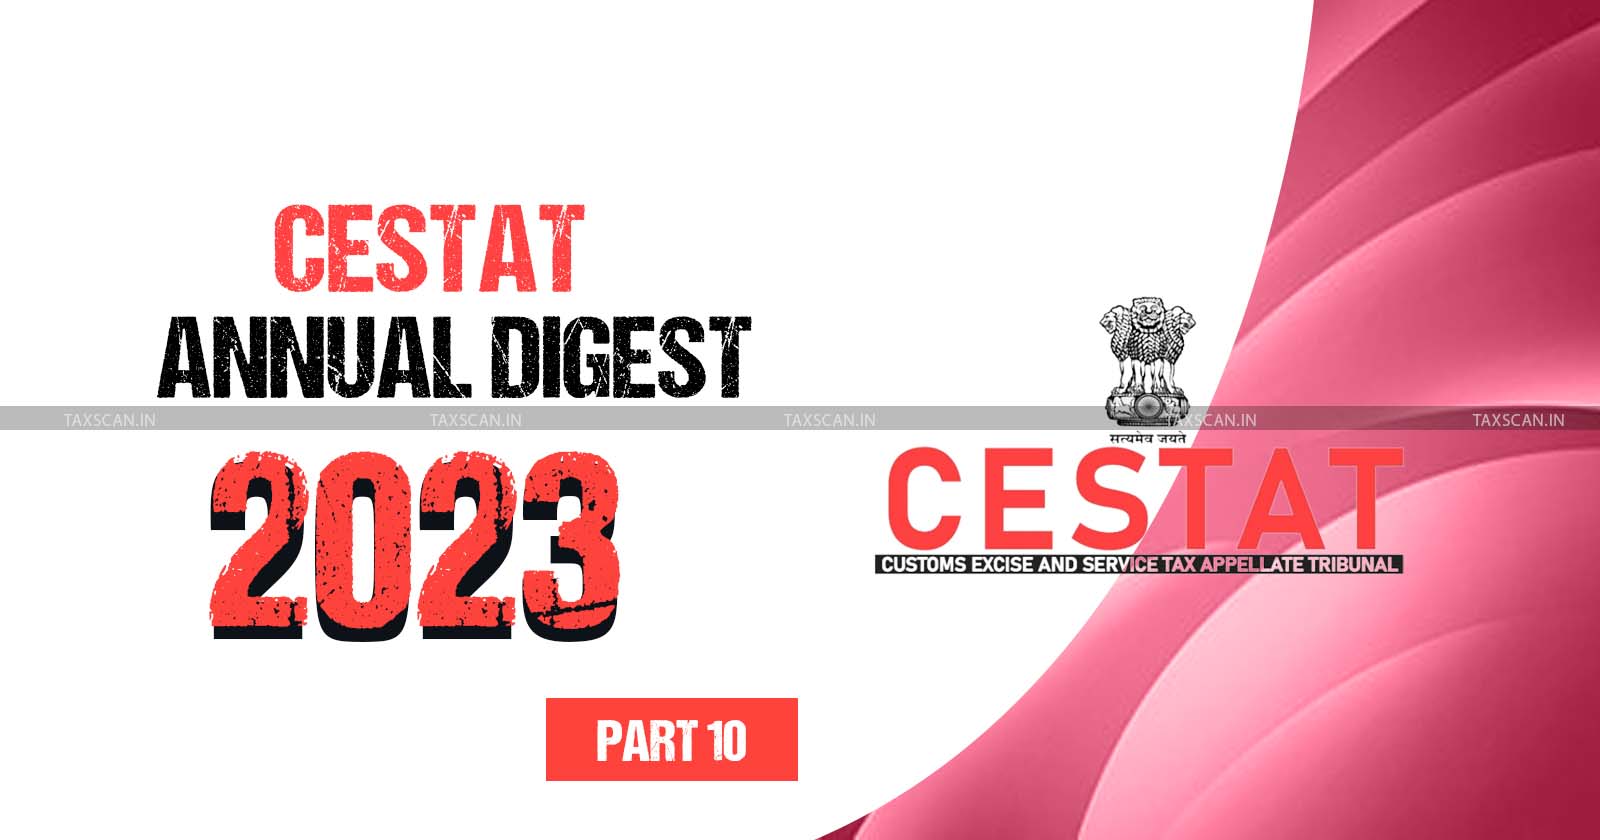 custom judgments - Annual Digest 2023 - CESTAT Annual Digest 2023 - cestat - TAXSCAN